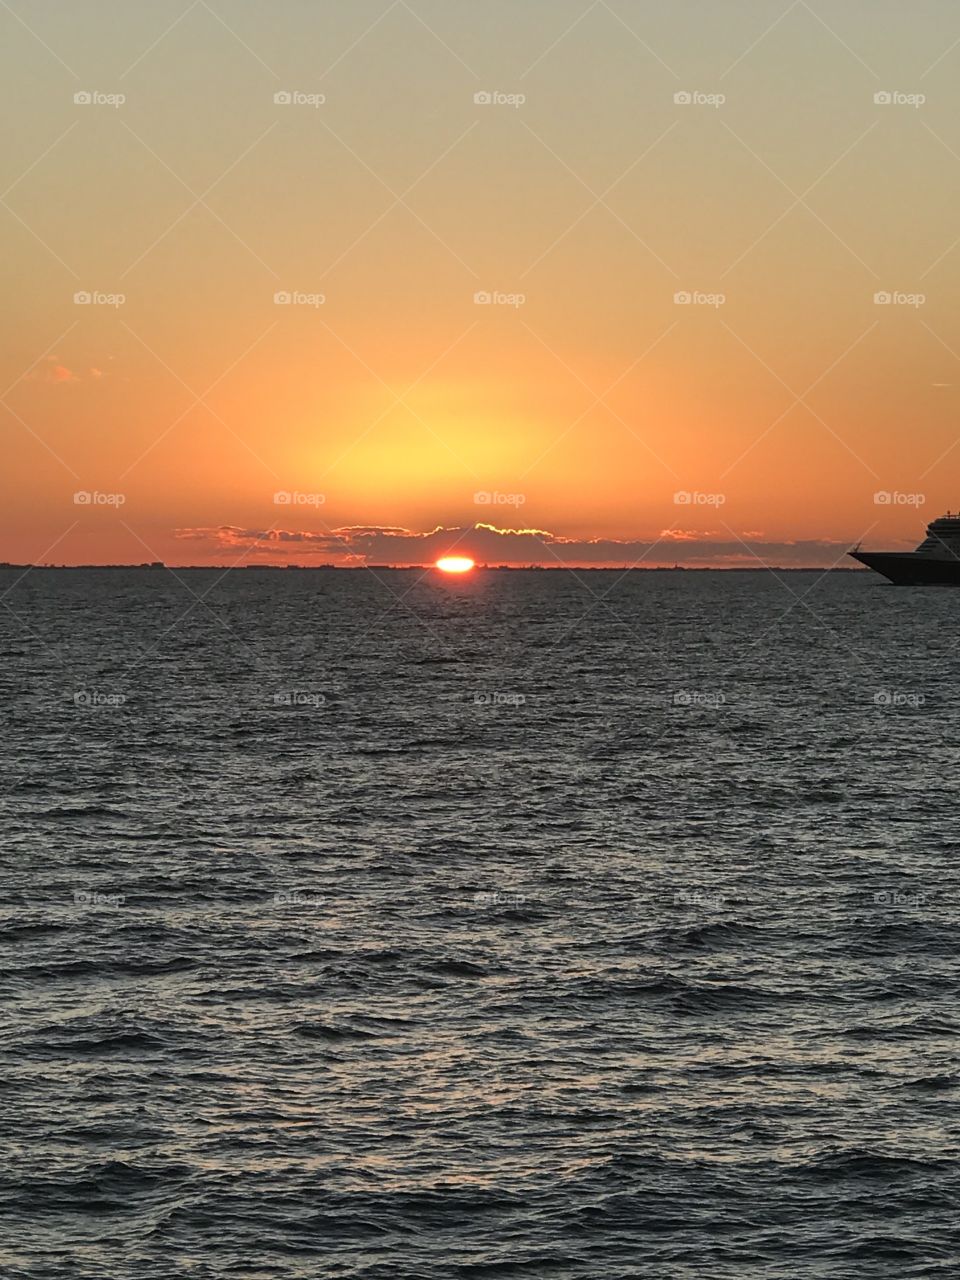 Sunset ocean boat evening 